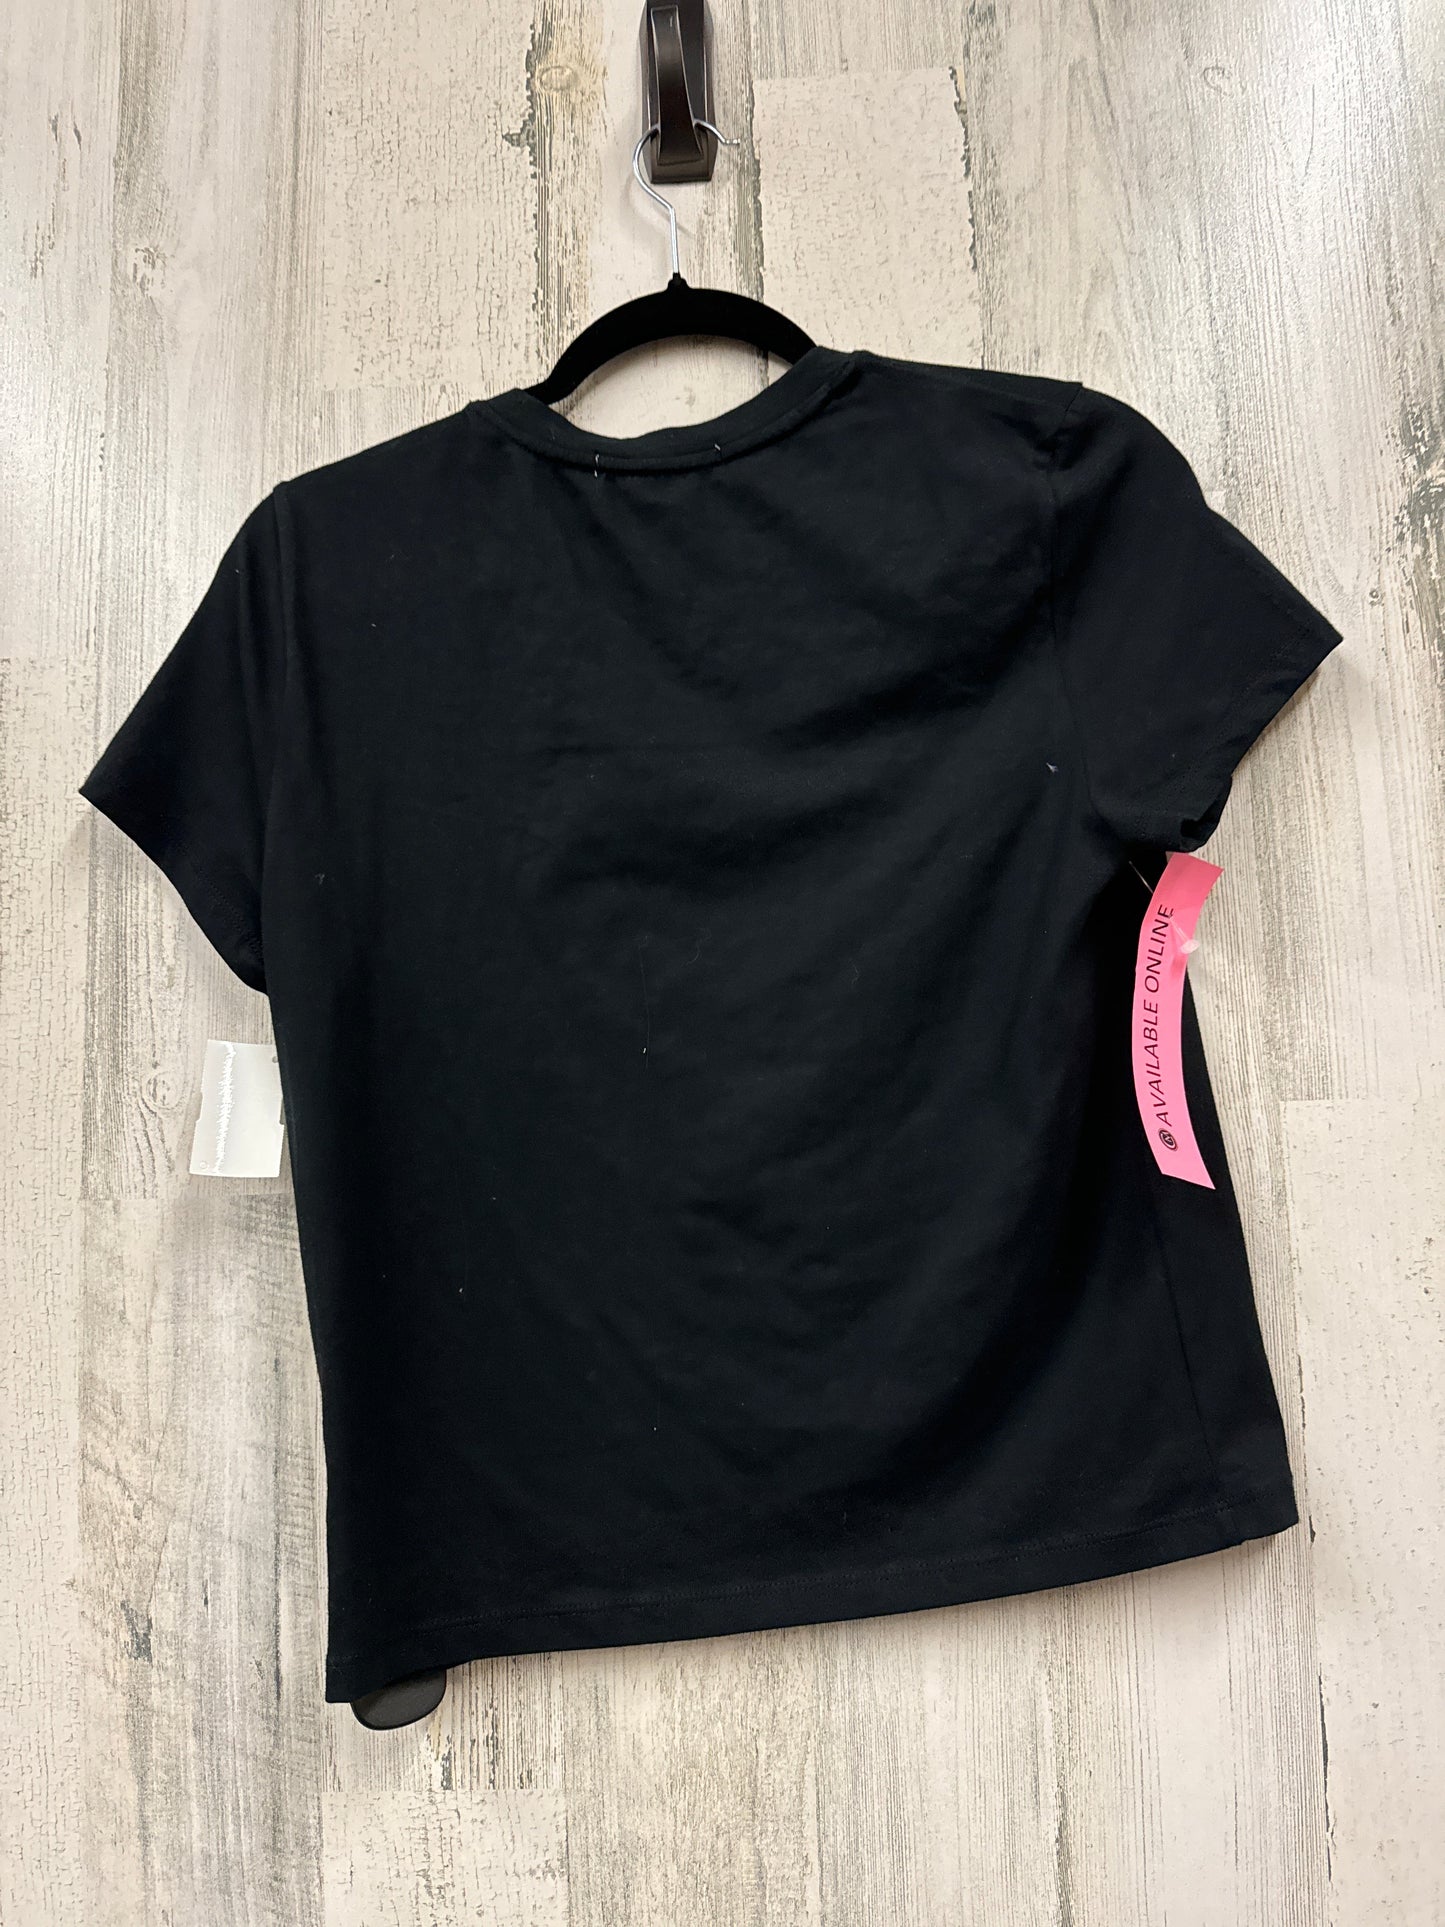 Black Top Short Sleeve Basic Clothes Mentor, Size L